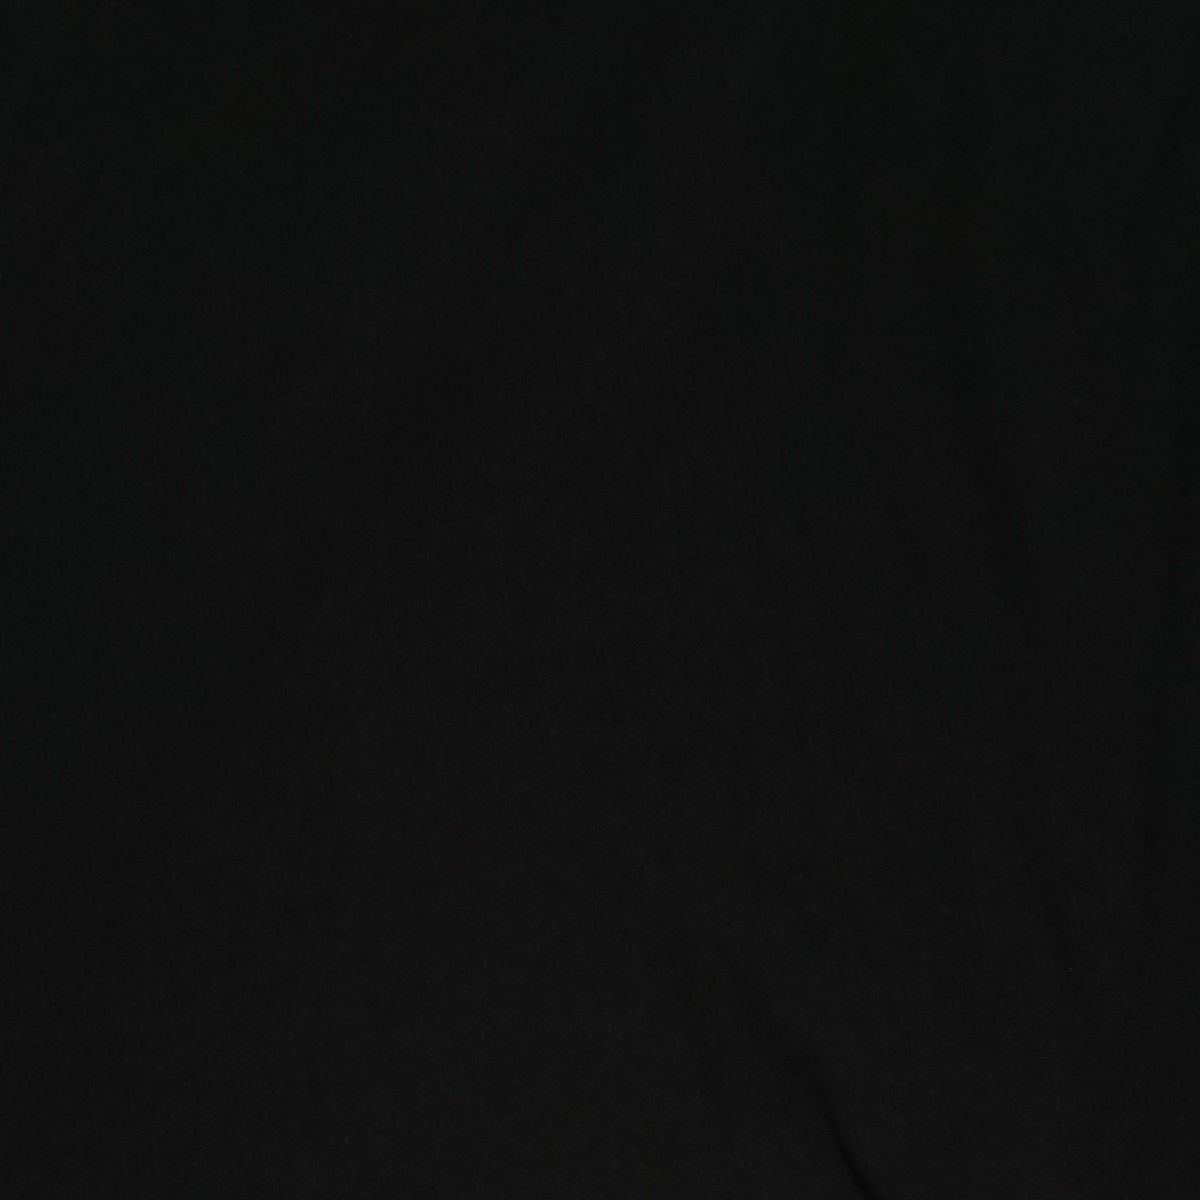 GU ジーユー ノースリーブワンピース 裾フレア ブラック レディースXXL クーポン